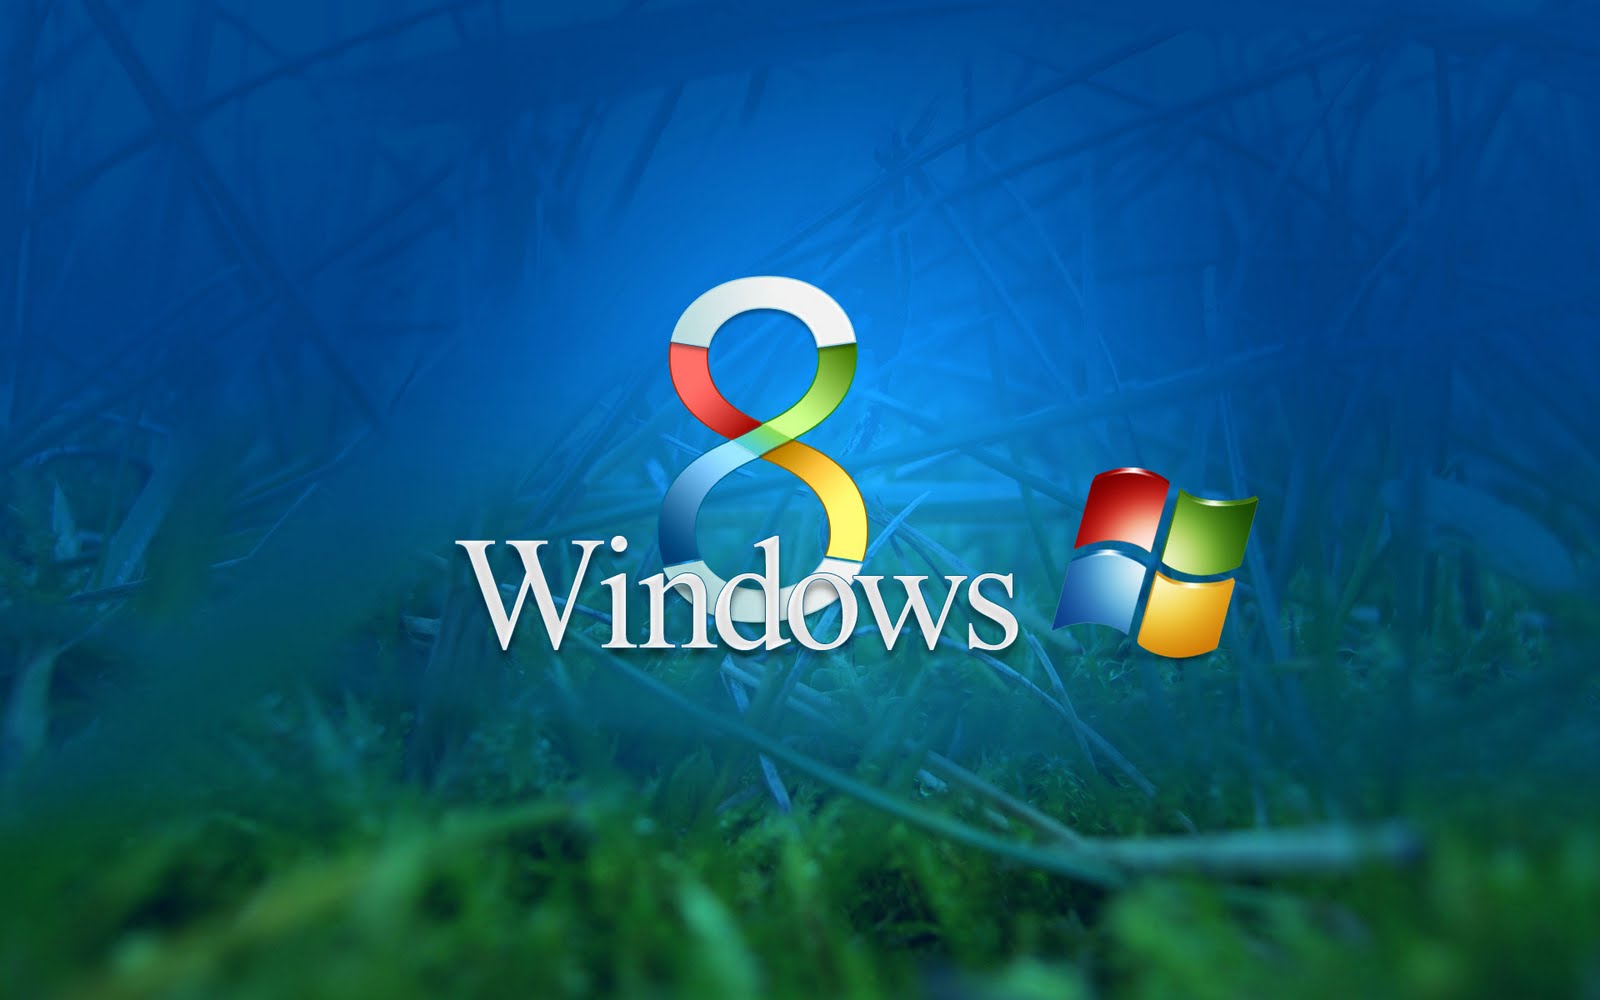 10 Best High Quality Microsoft Windows 8 Wallpaper for all Windows